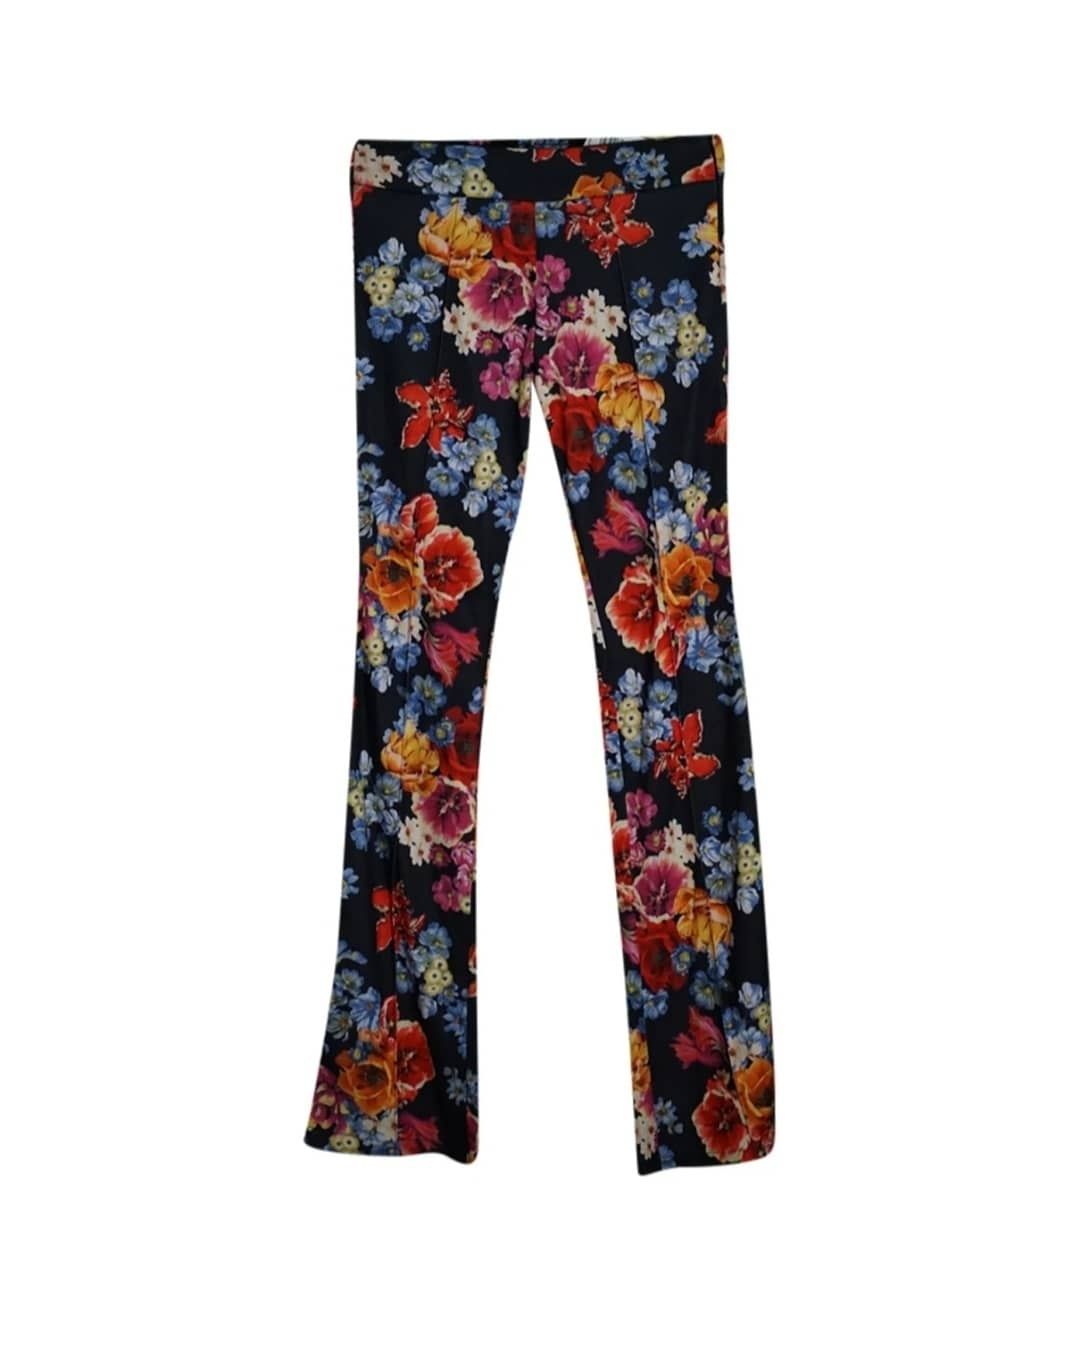 Pantaloni evazati cu flori Noi ( stil Zara, shein )